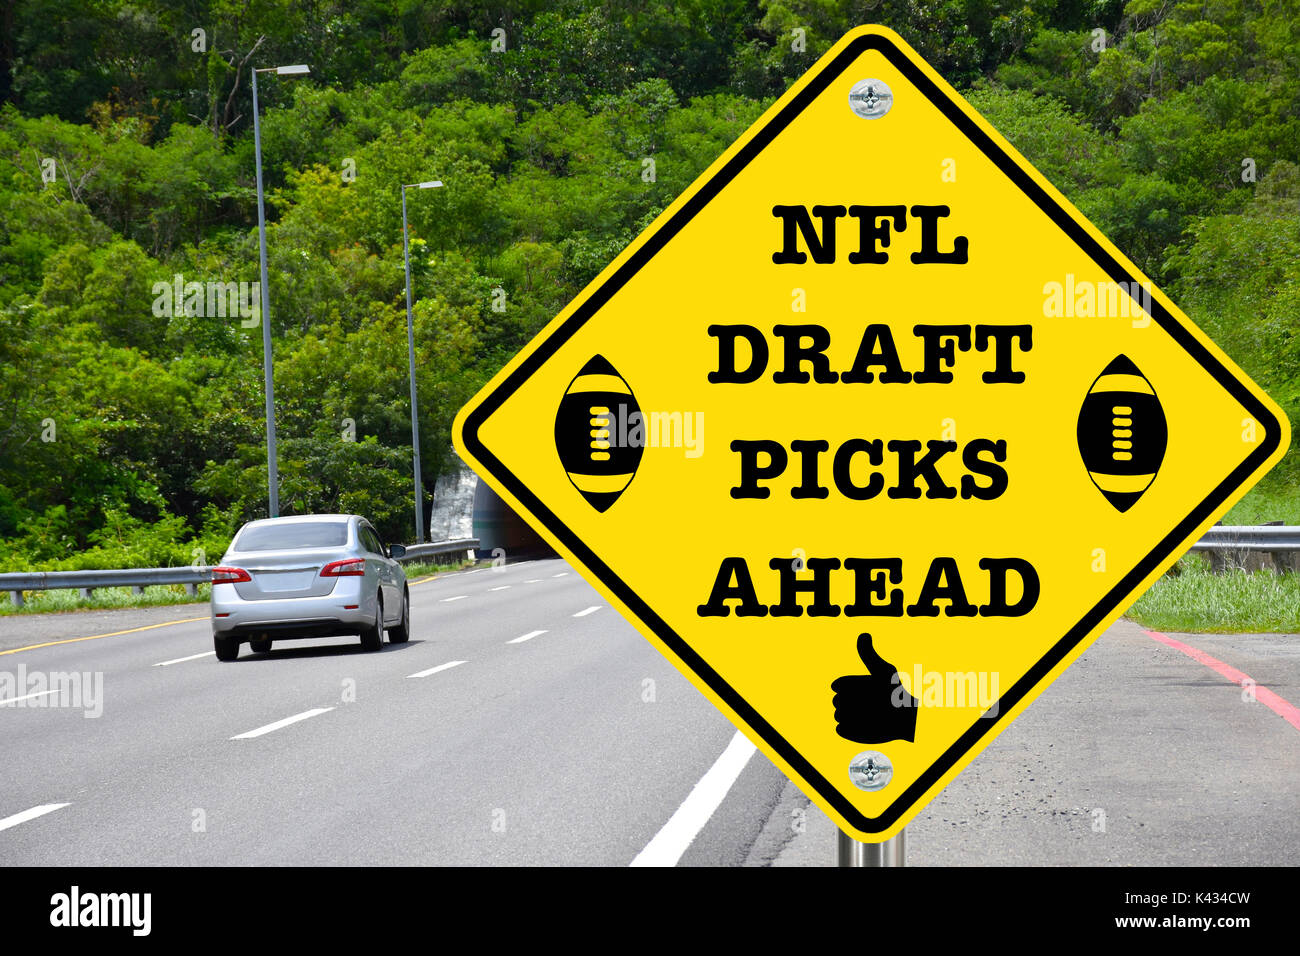 NFL draft picks ahead, yellow warning street sign Stock Photo